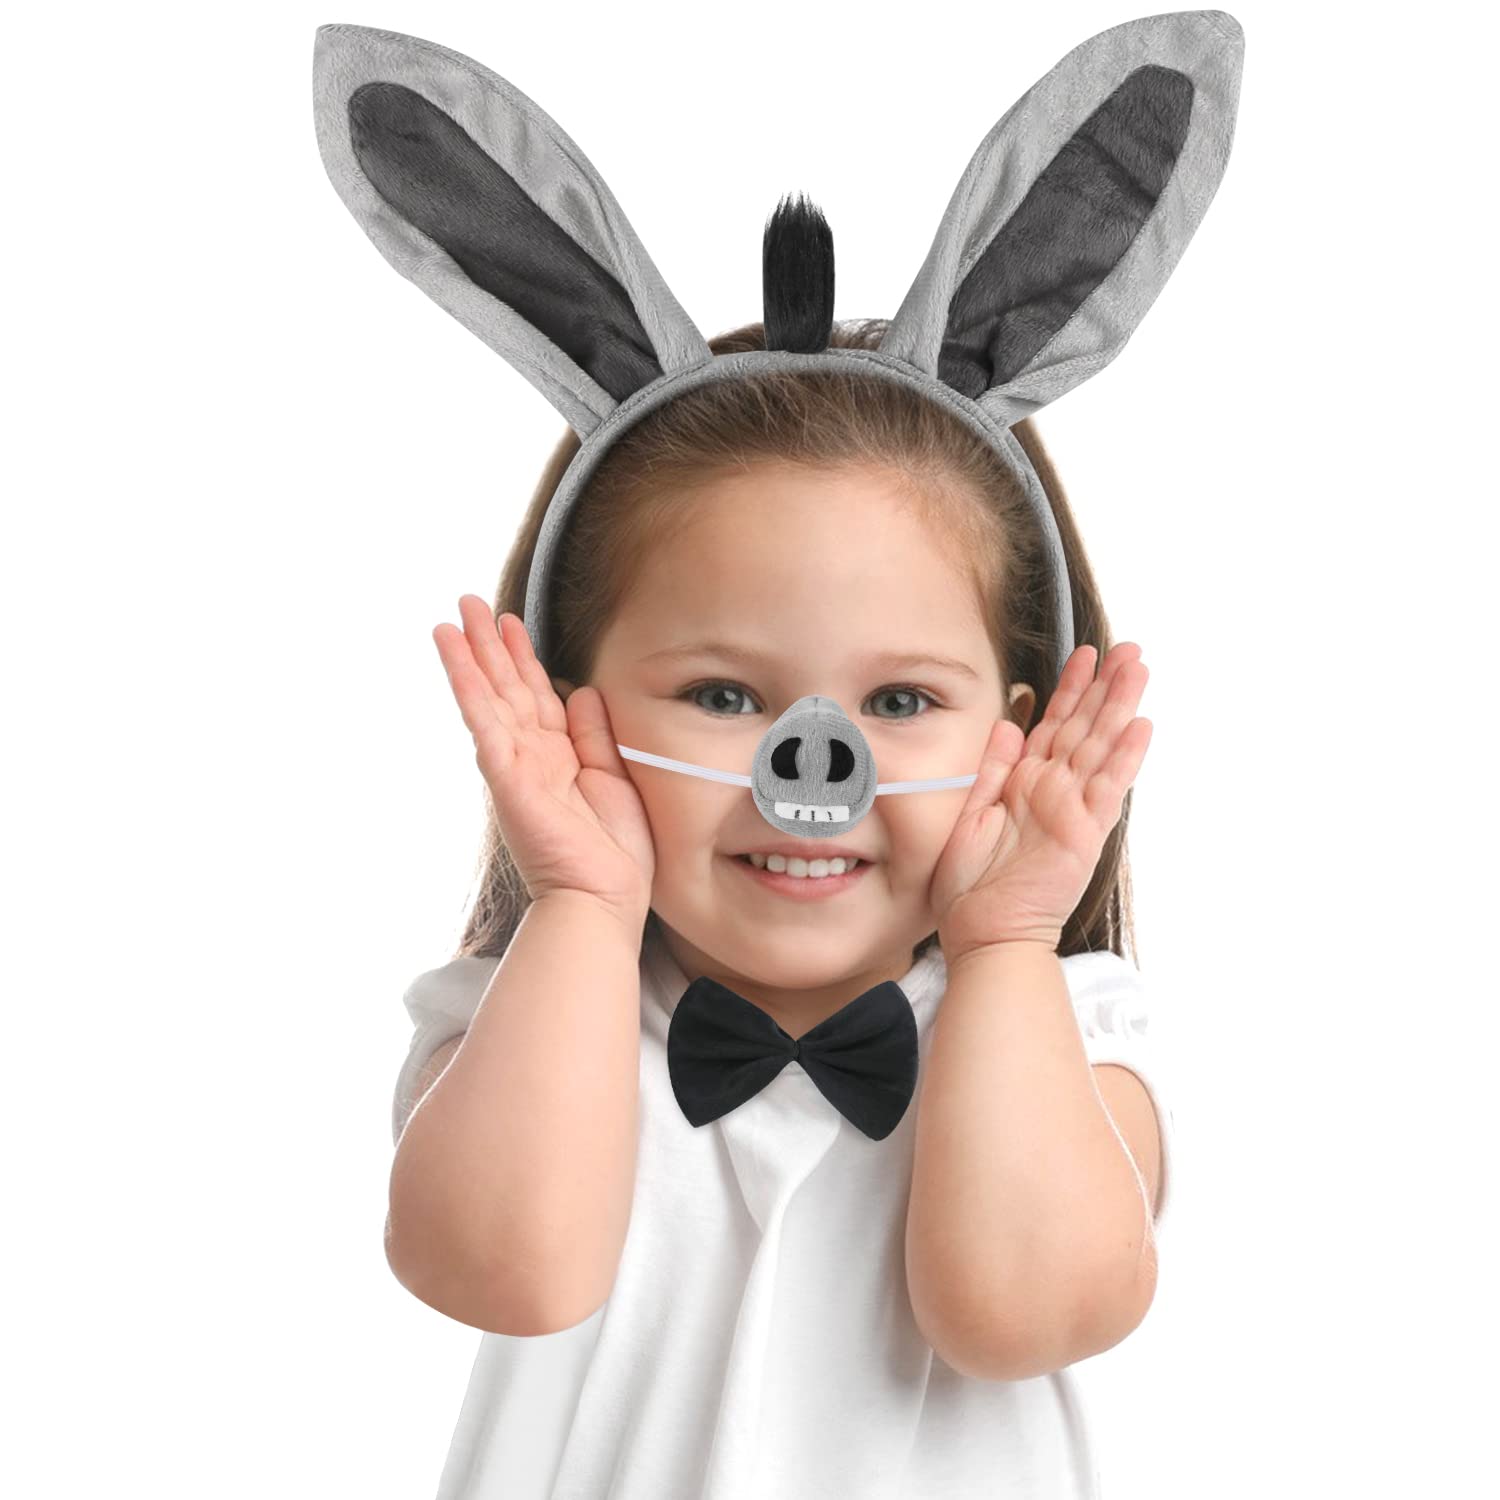 Donkey ears halloween costumes